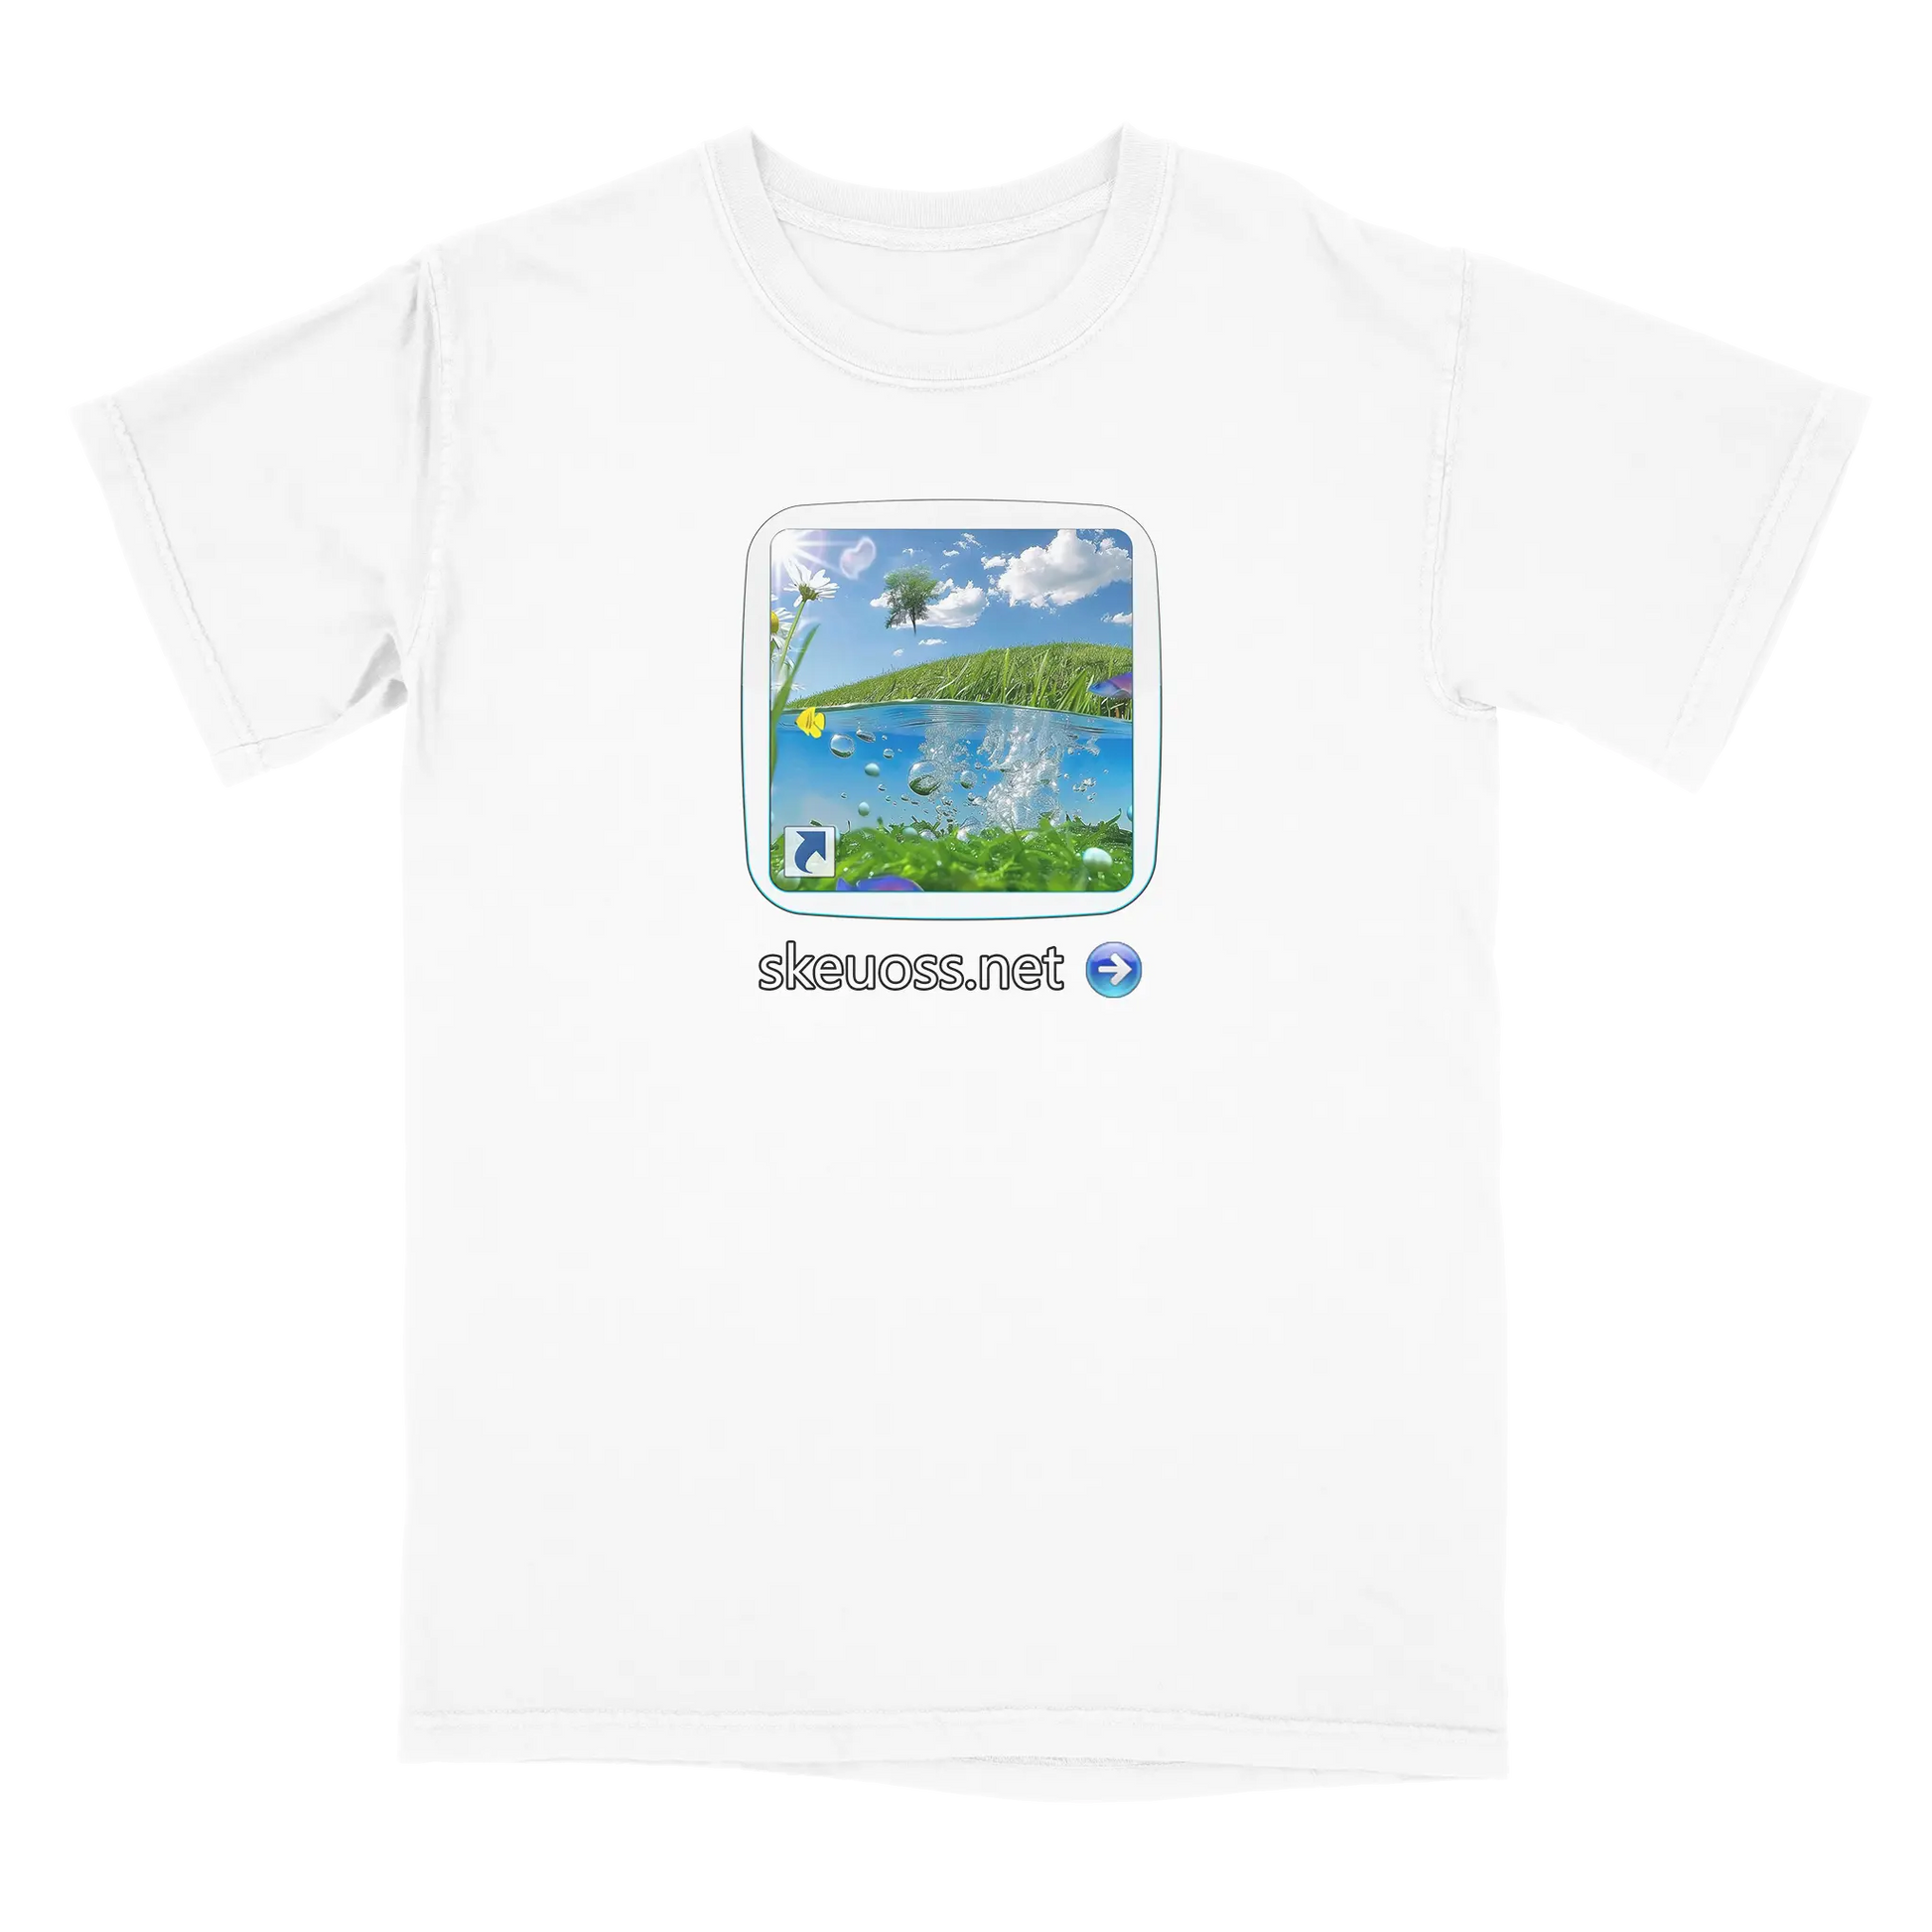 Frutiger Aero T-shirt - User Login Collection - User 298